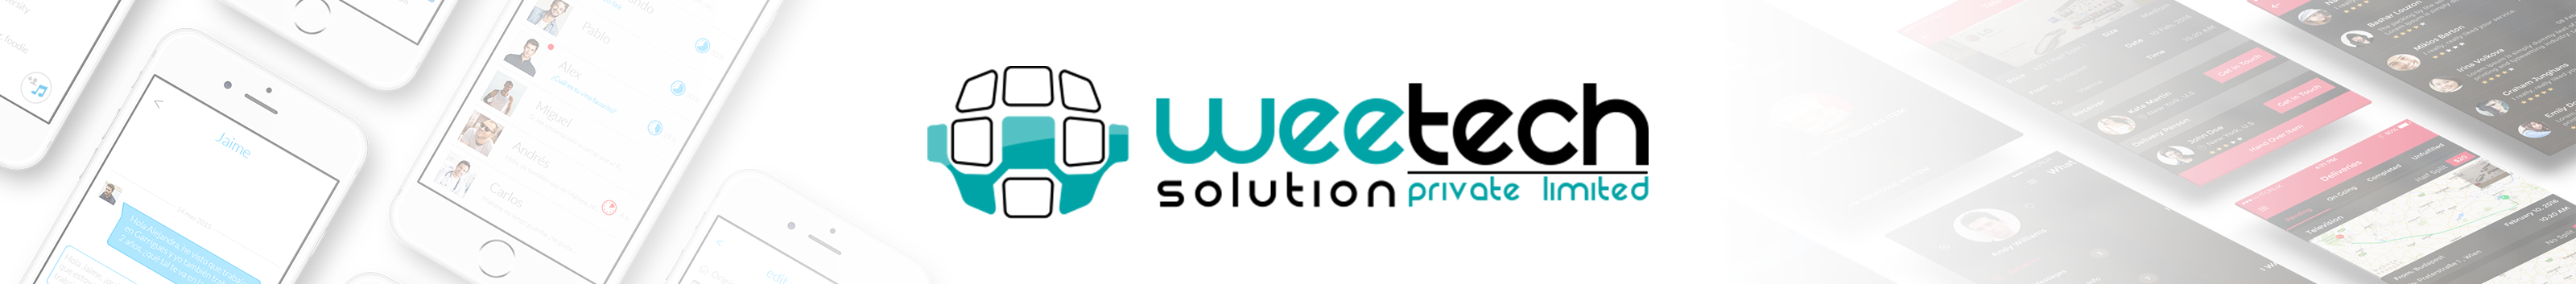 Баннер профиля WeeTech Solution